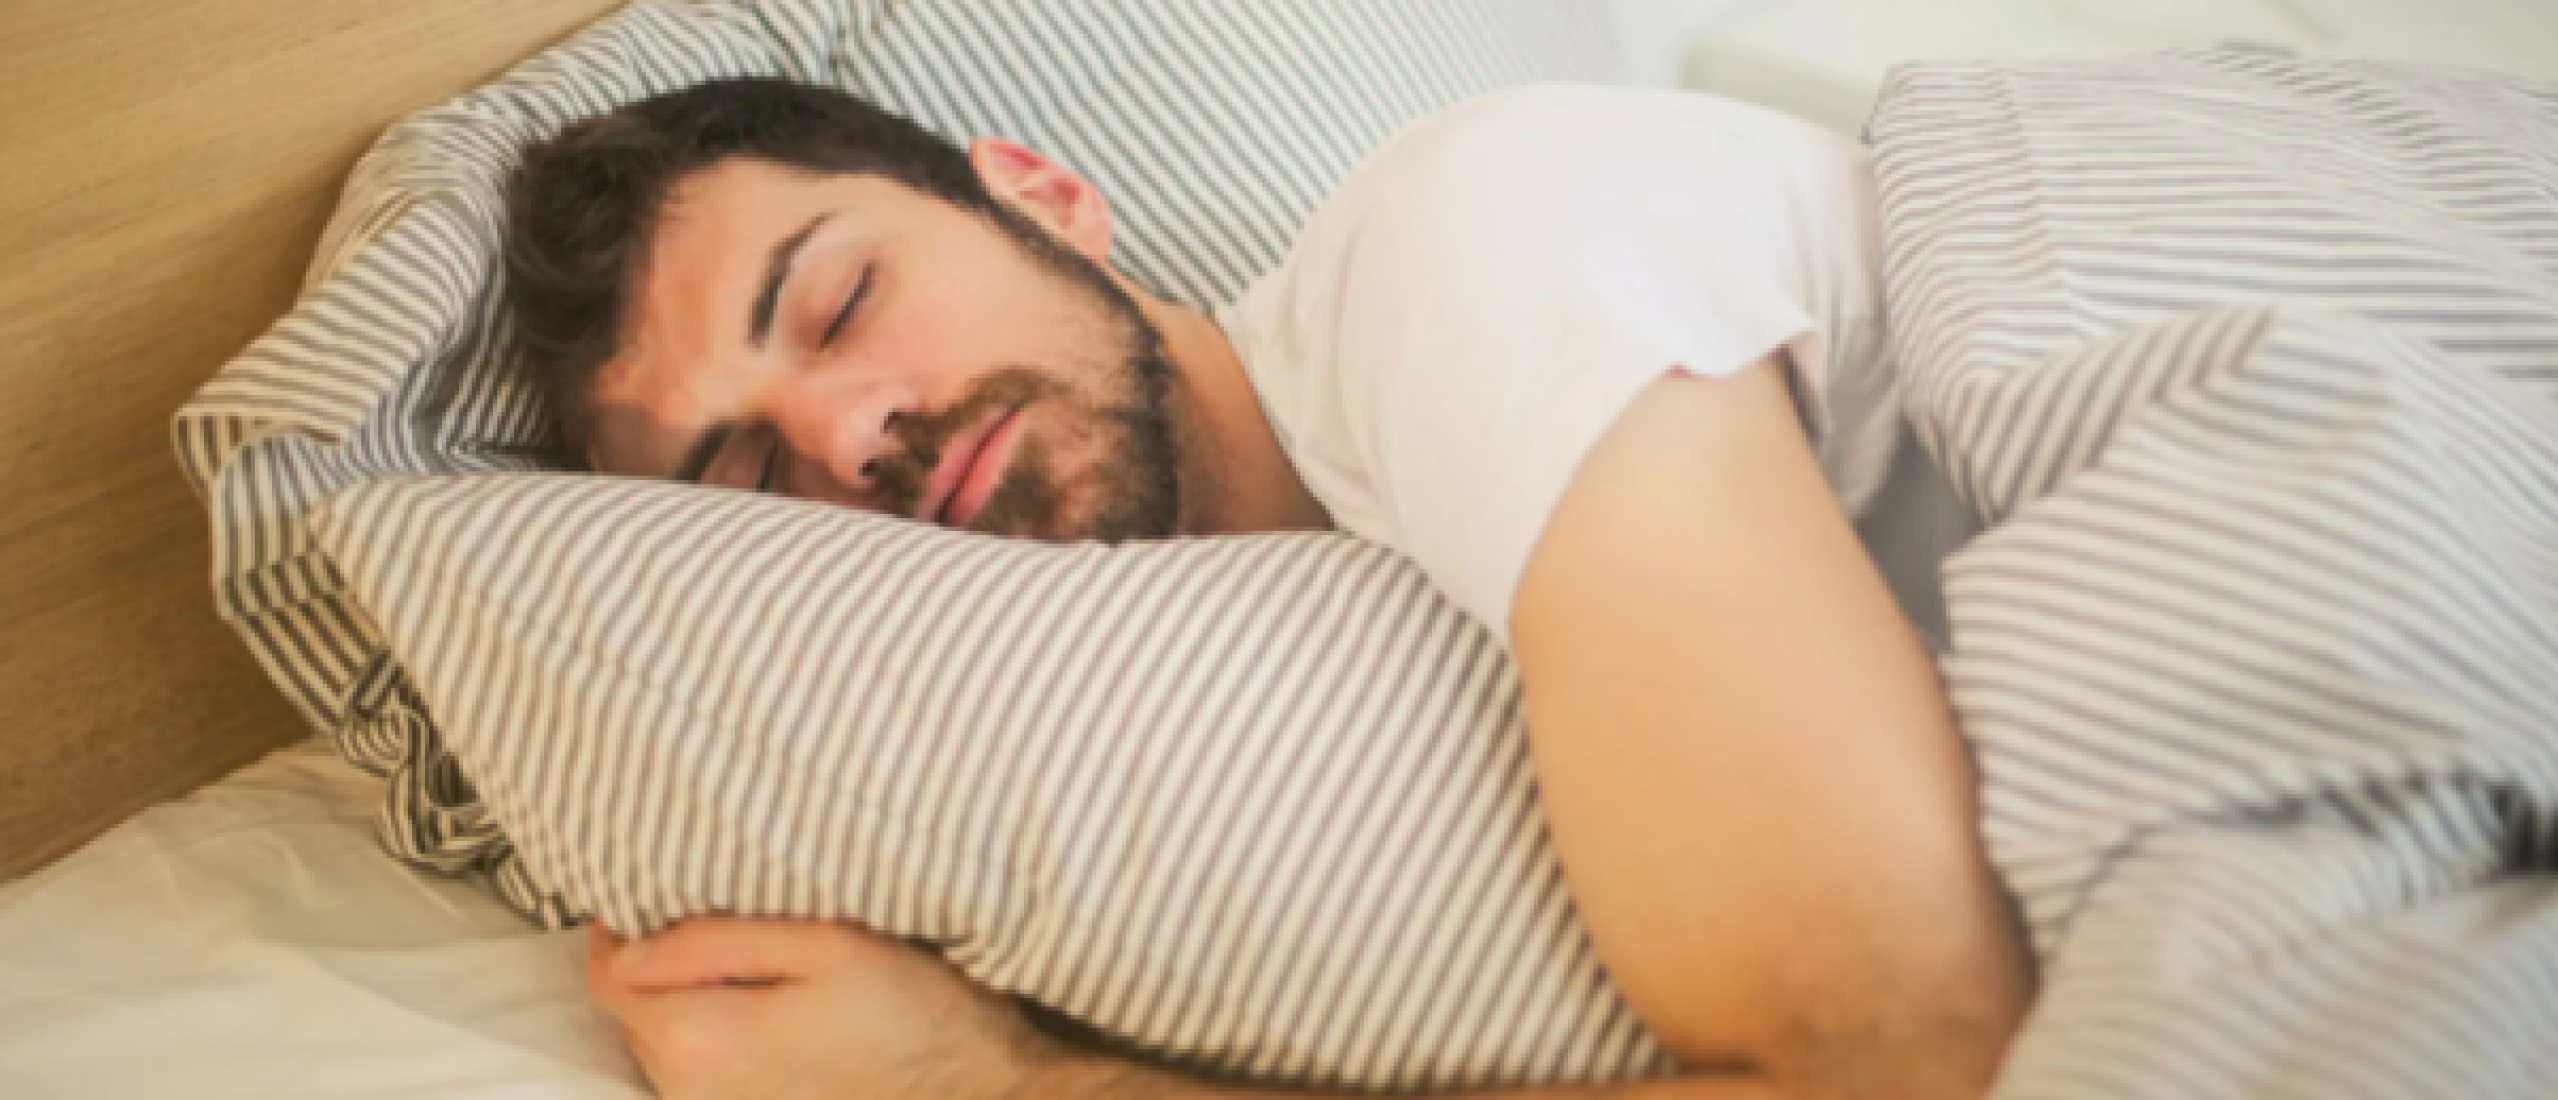 10 tips om je slaap te verbeteren